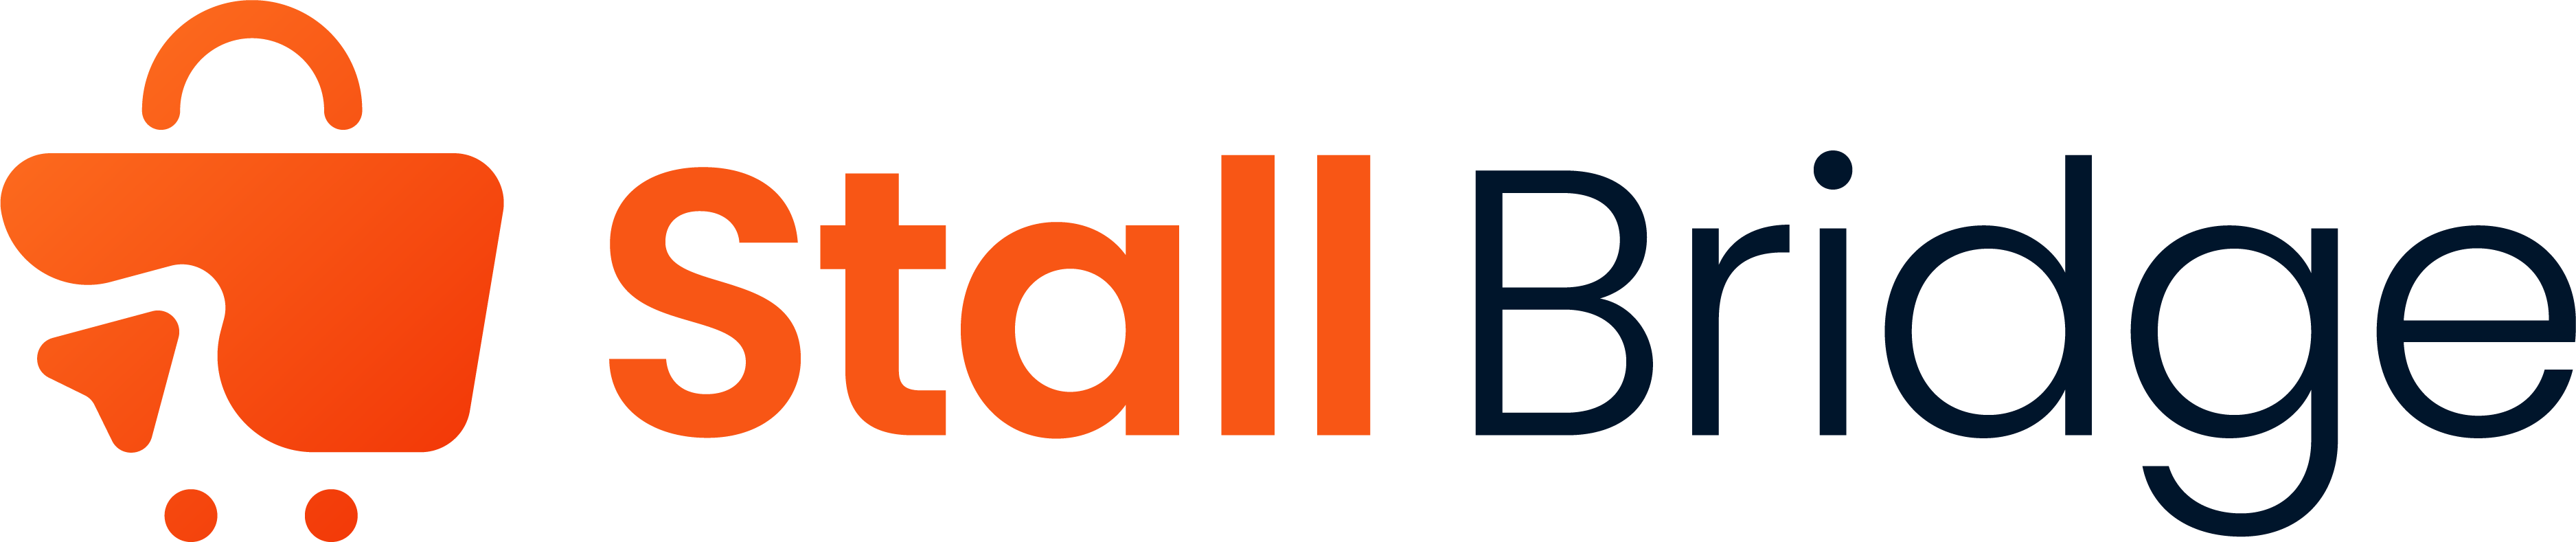 StallBridge Logo New B